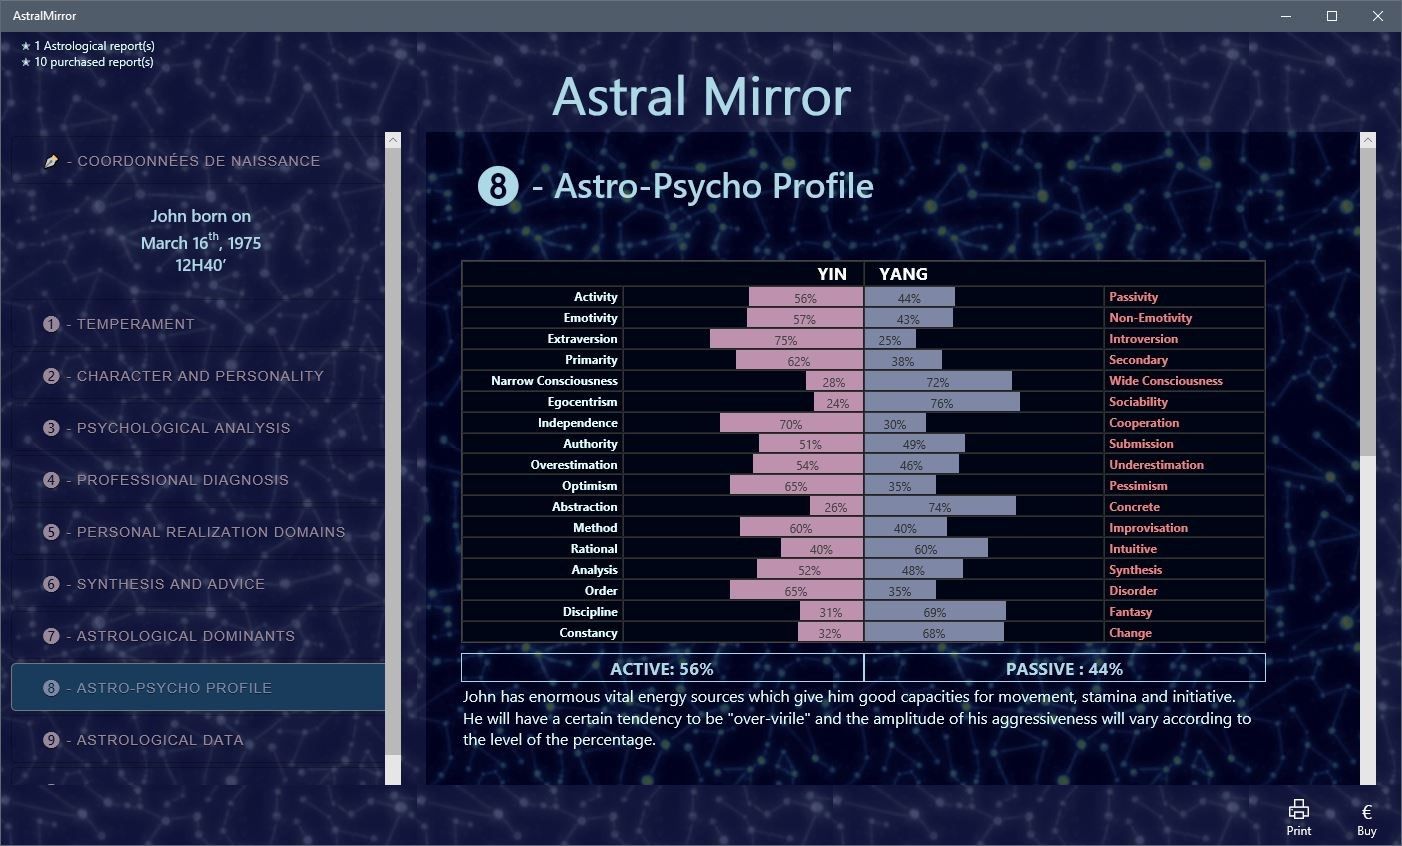 Astro-psycho profile